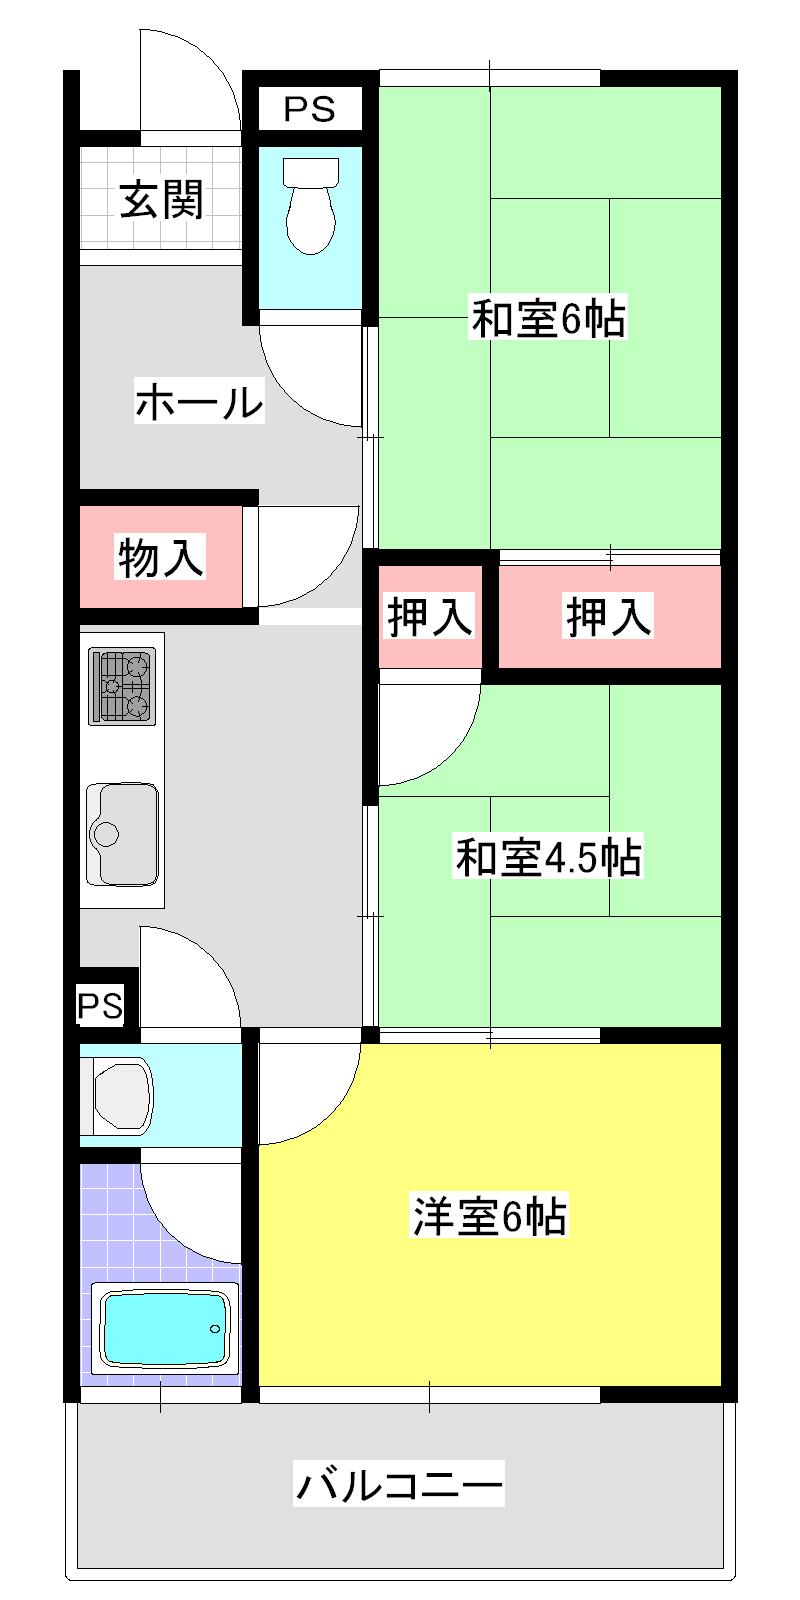 Floor plan. 3K, Price 2.5 million yen, Occupied area 50.36 sq m , Balcony area 5.88 sq m